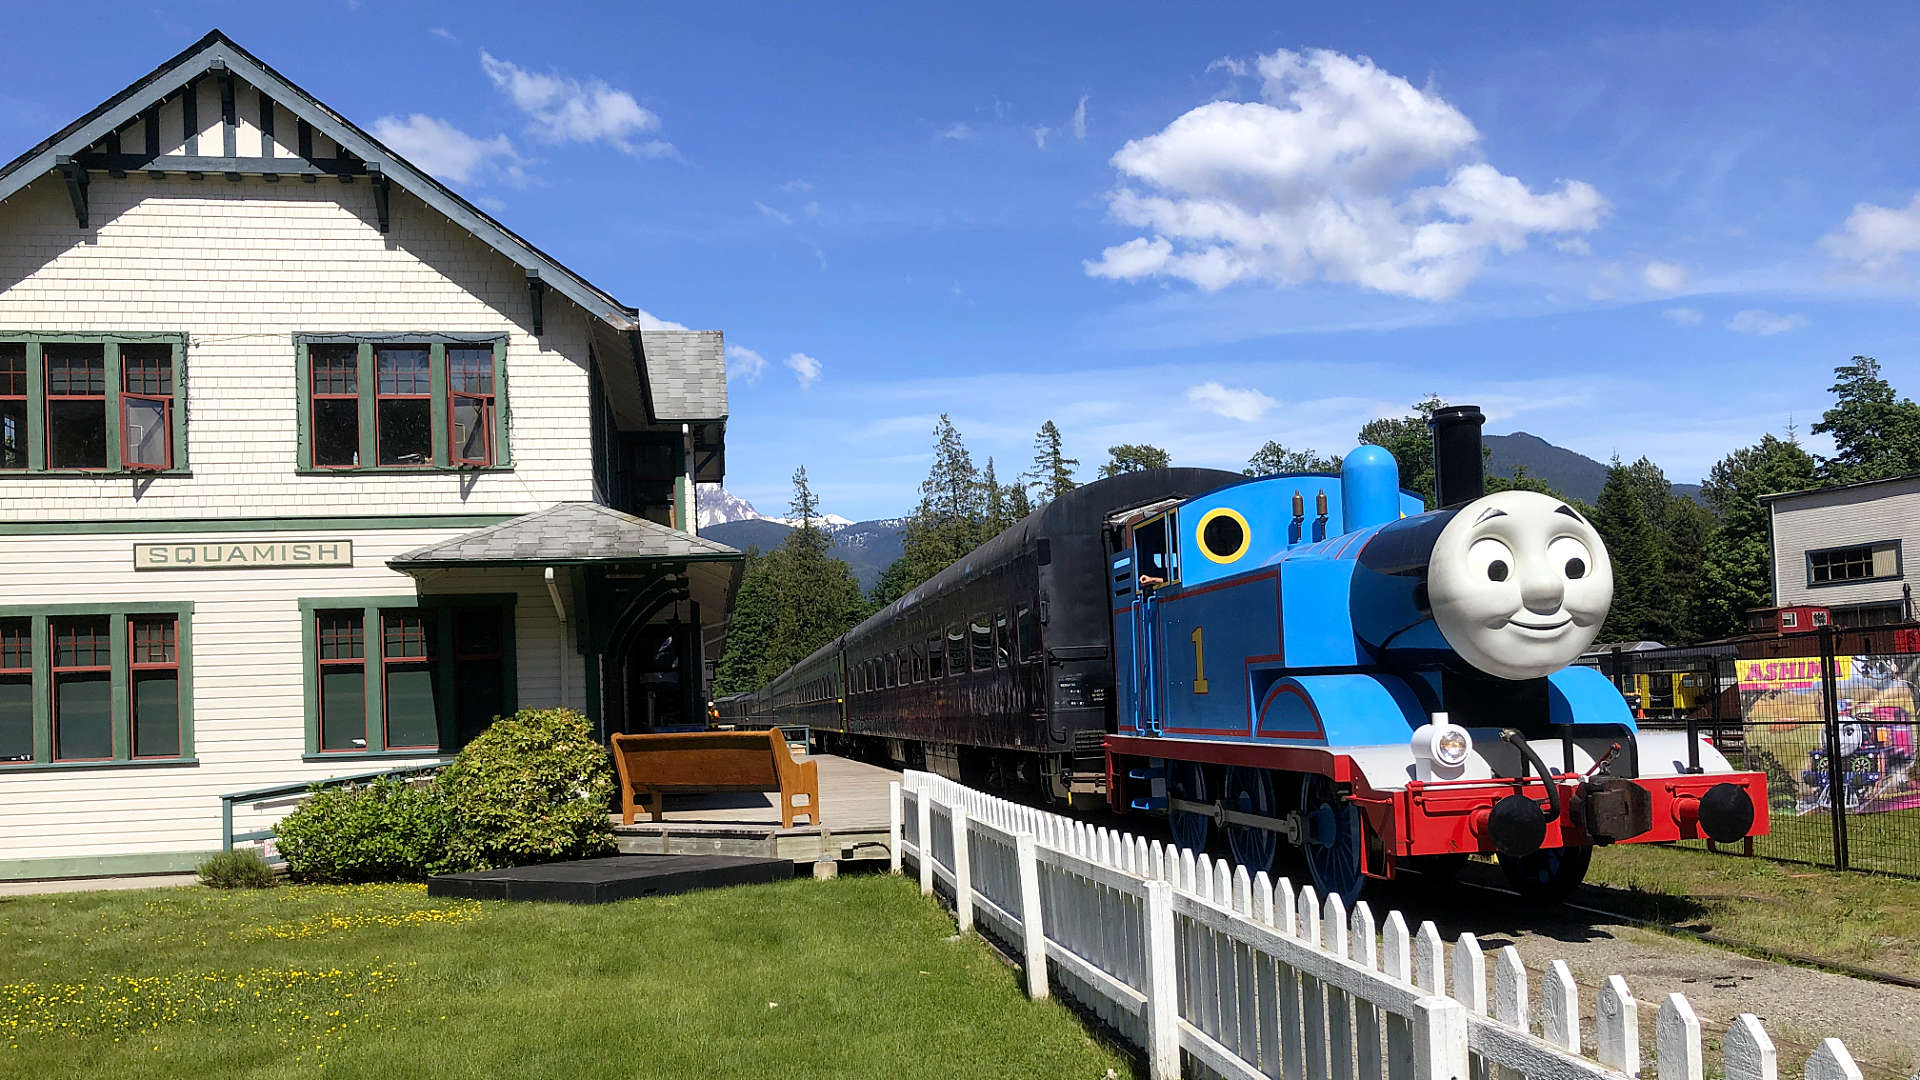 Thomas at Squamish Station